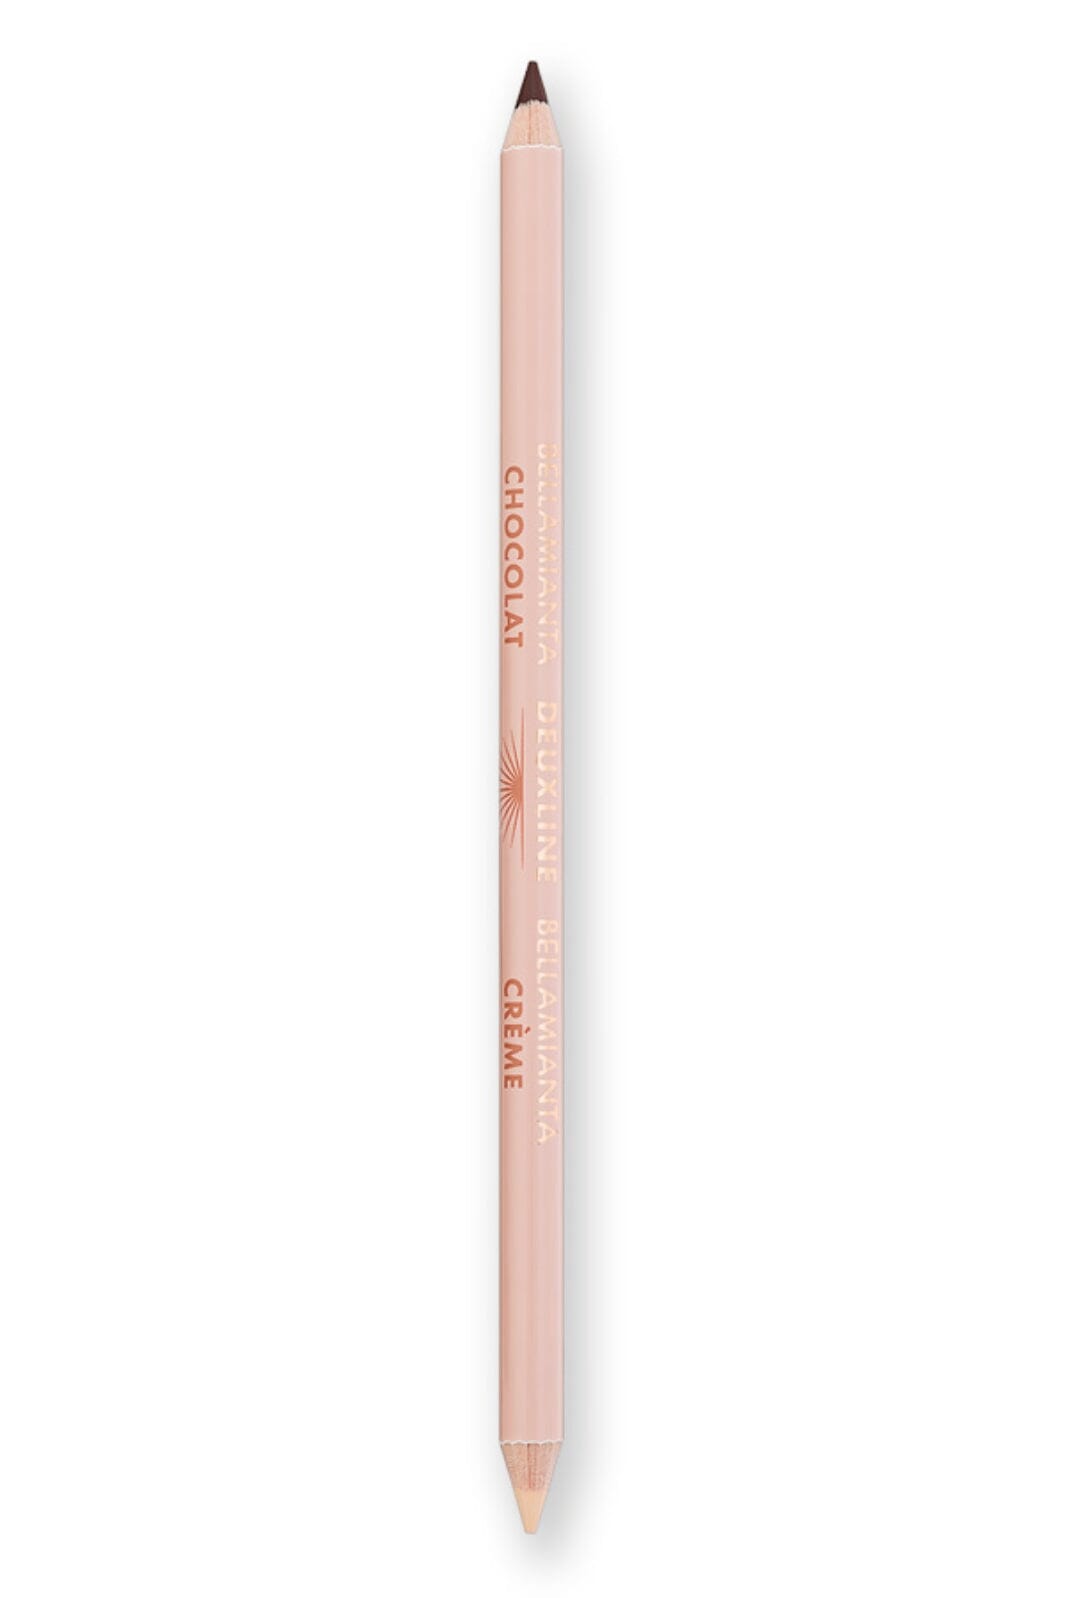 Bellamianta - Deuxline 2 in 1 Eyeliner Pencil – cream and brown - Eyeliner 